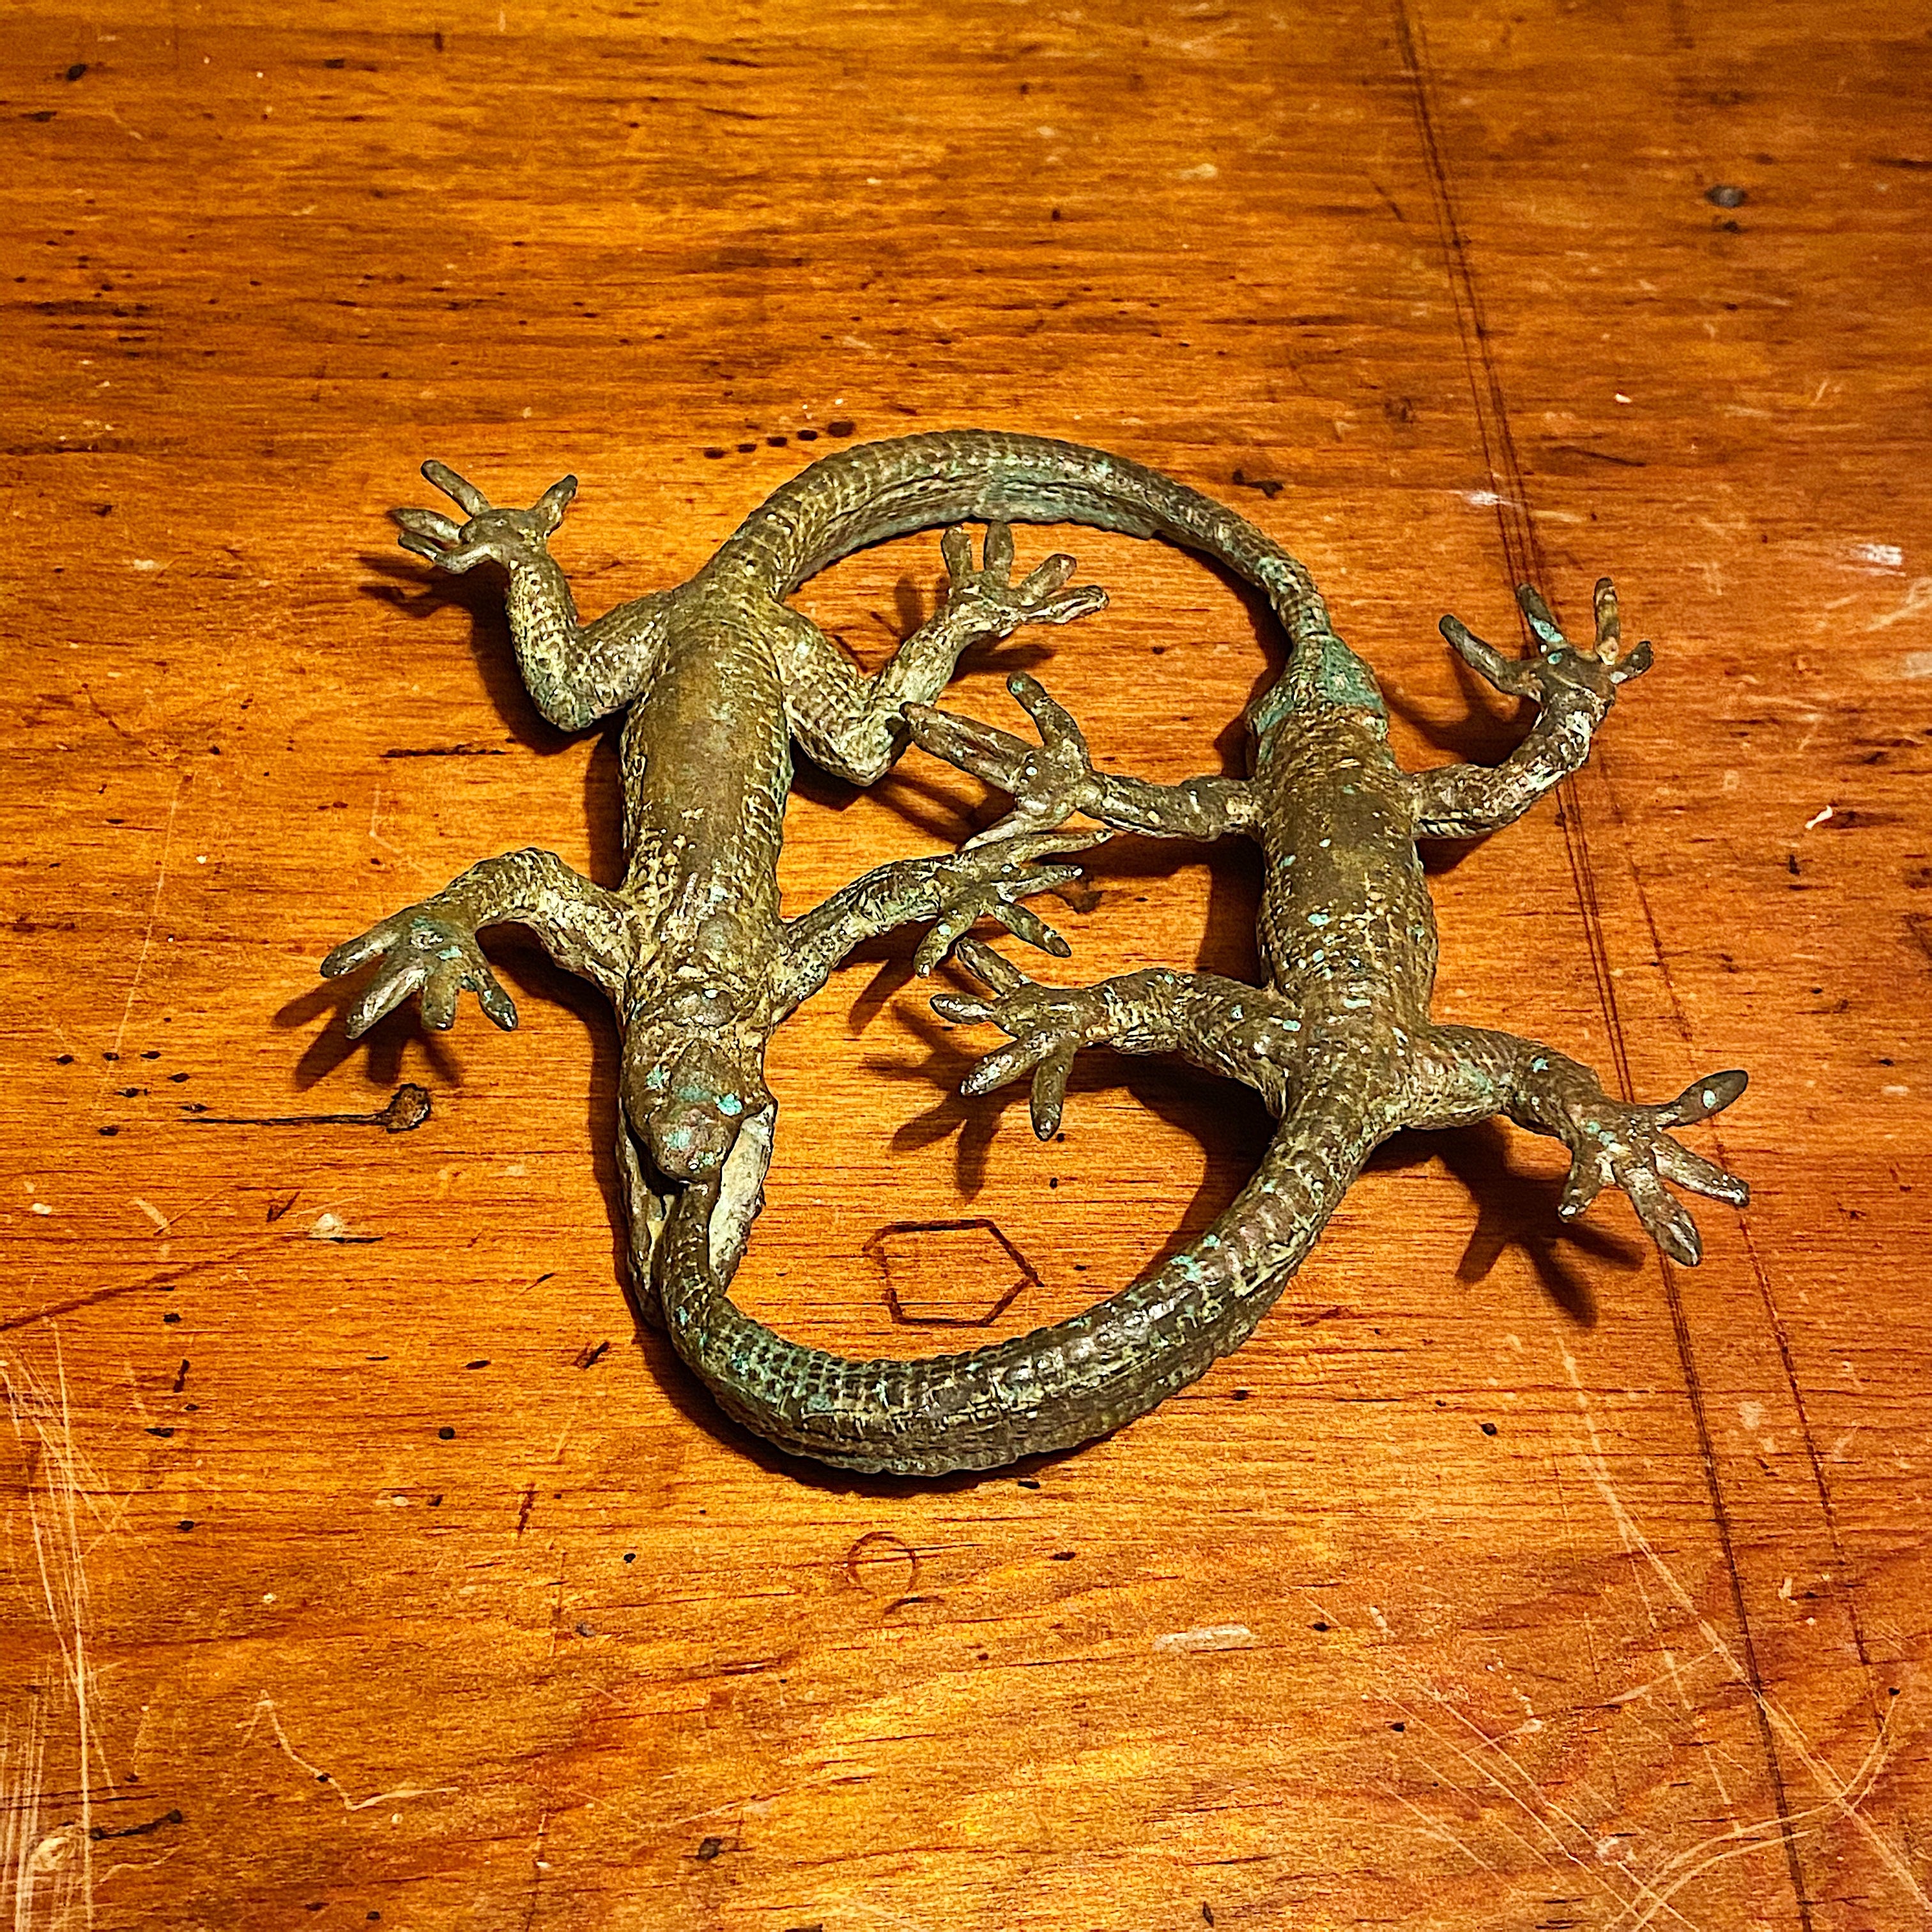 Stephen Maxon Bronze Sculpture of Lizards Eating Tails | Ouroboros